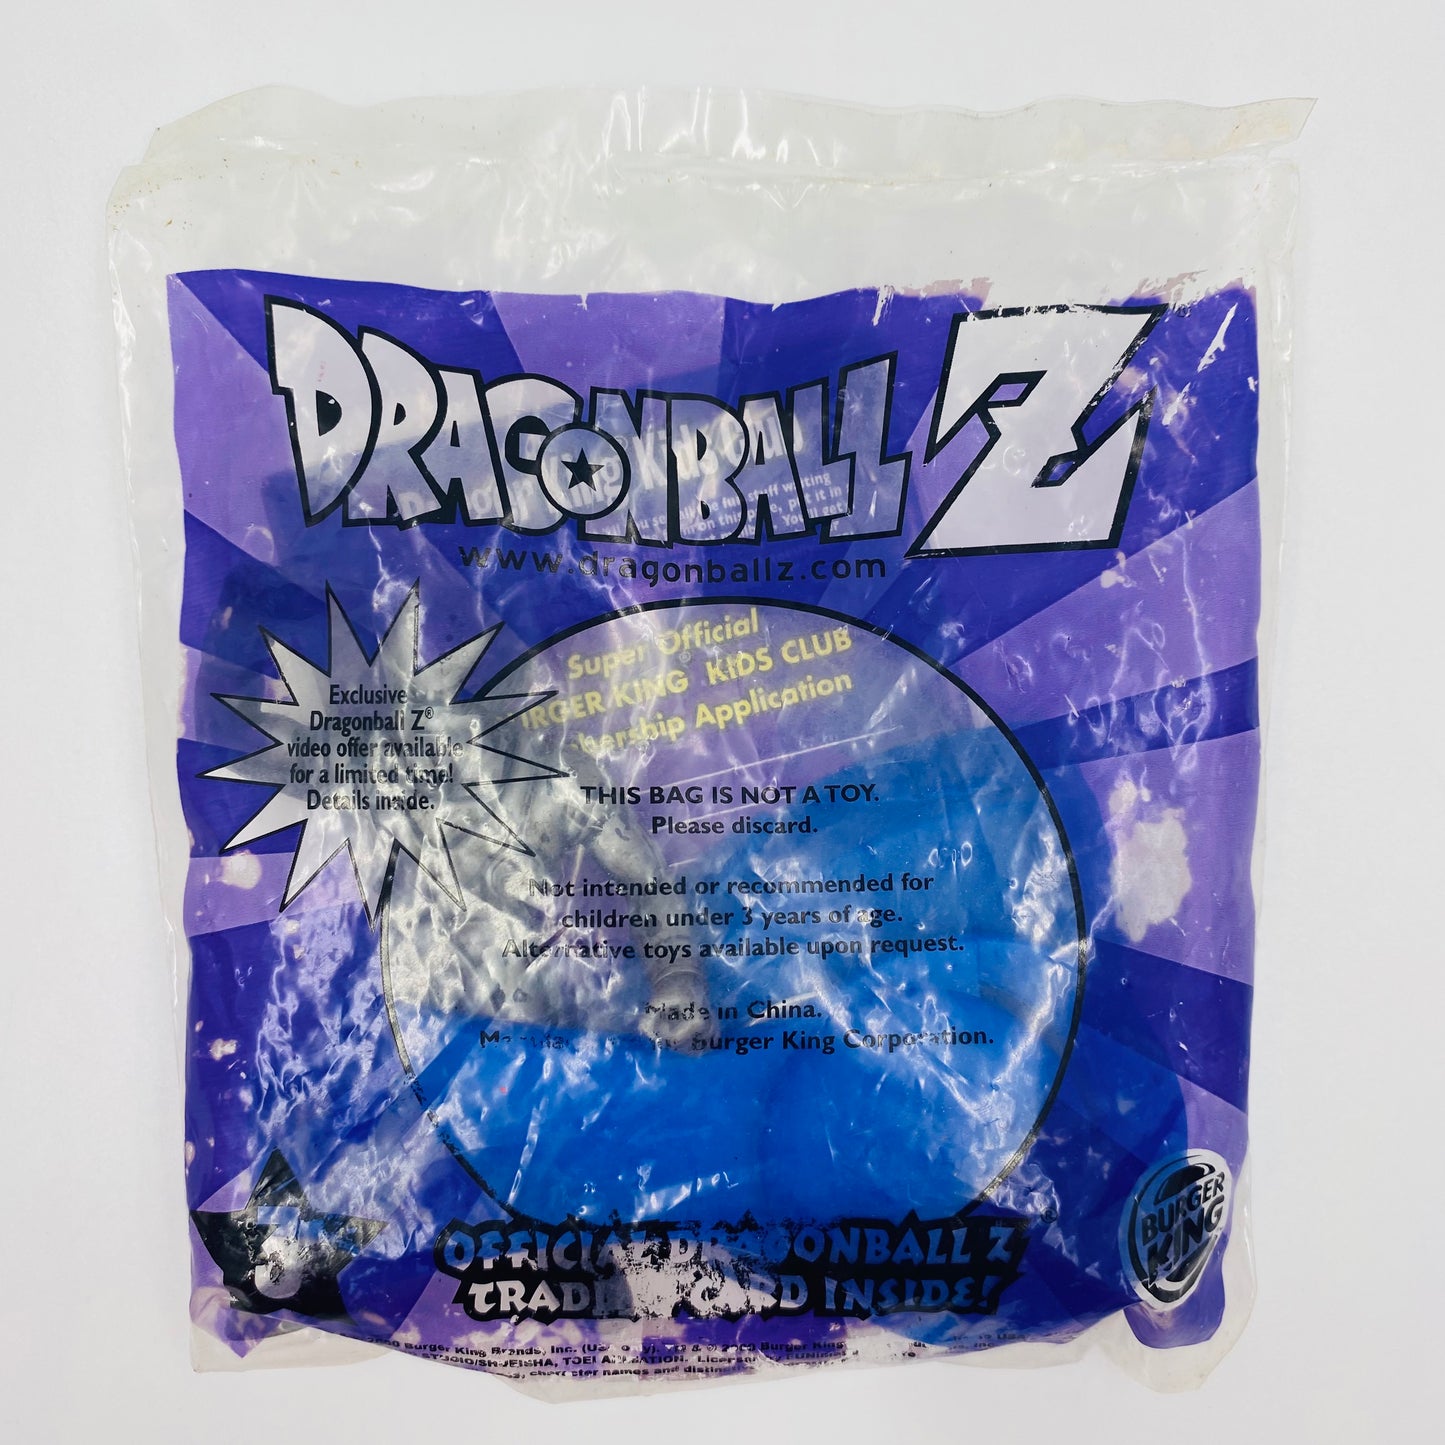 Dragonball Z Krillin Burger King Kids' Meals toy (2000) bagged